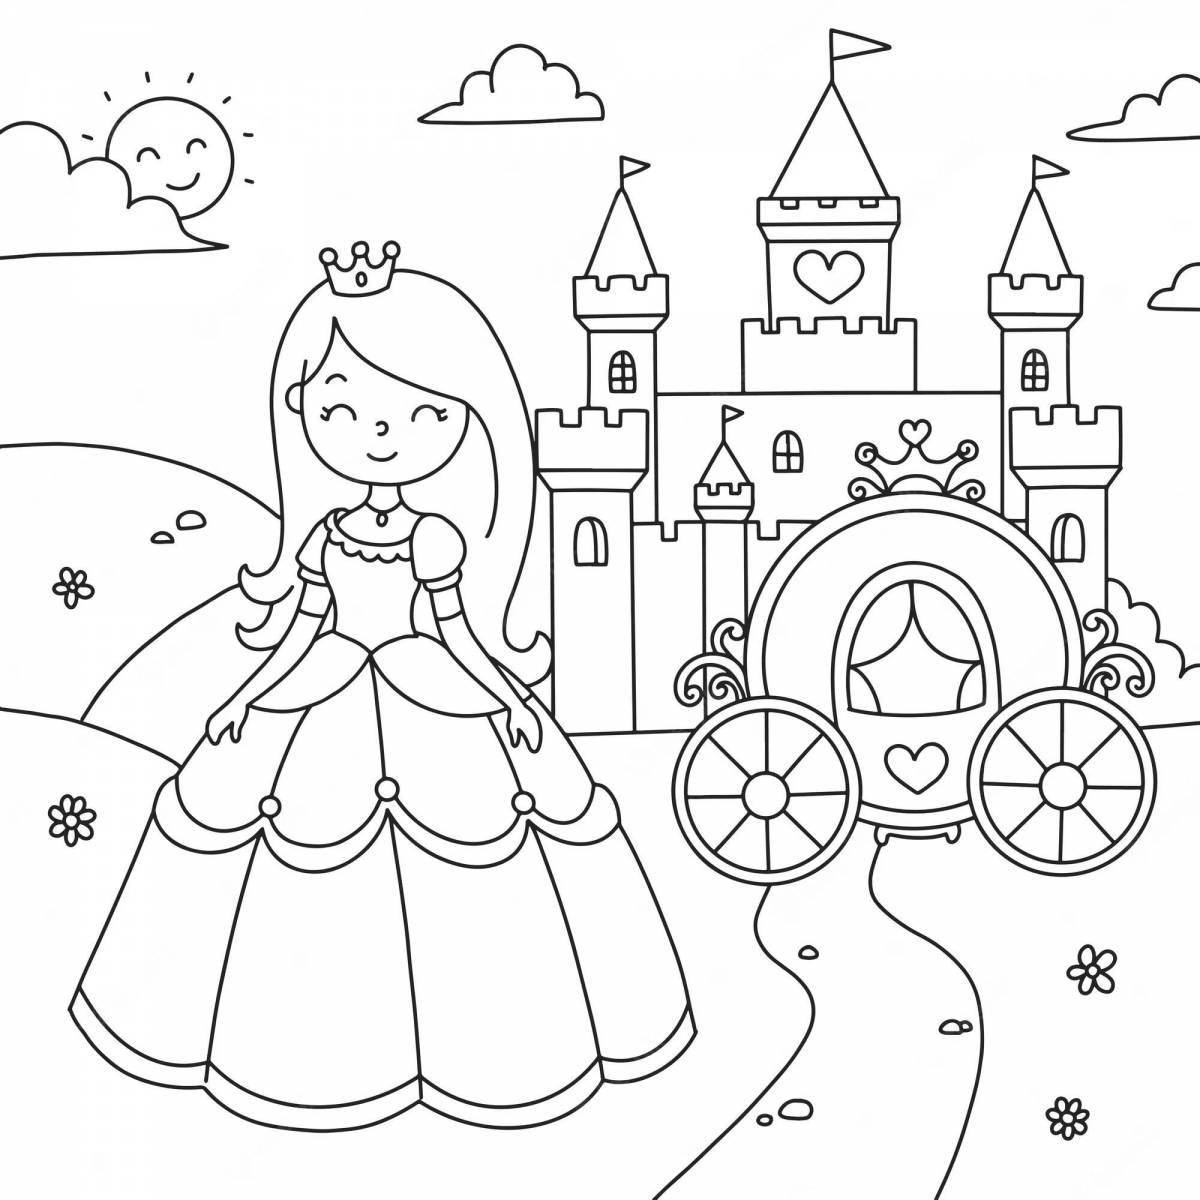 Princess in the castle #10